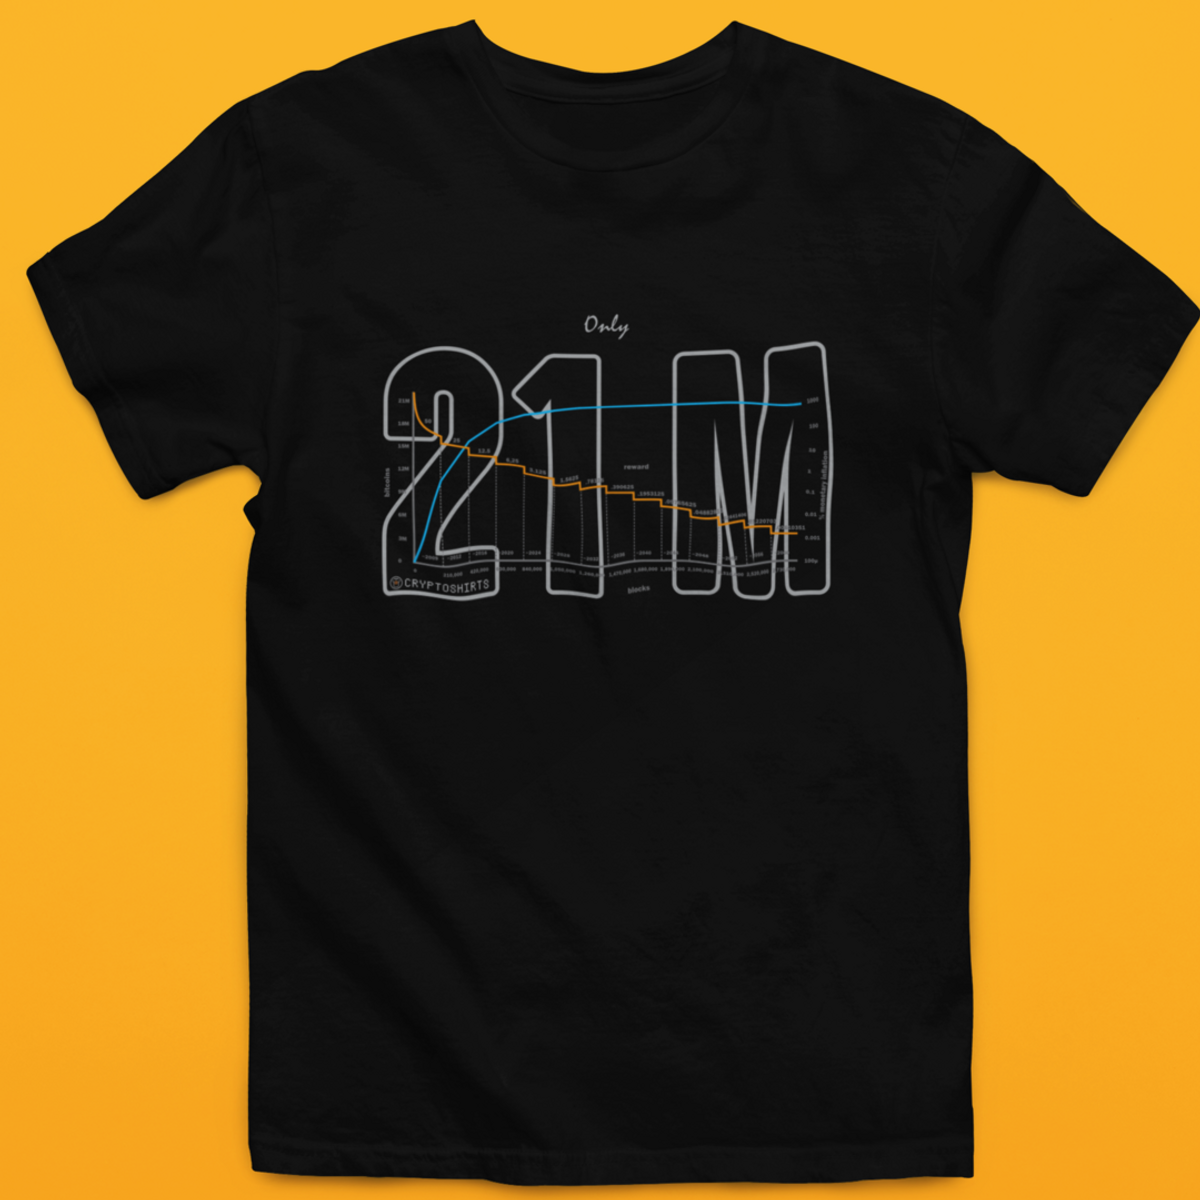 Nome do produto: Camiseta CryptoShirts 03 - Only 21M